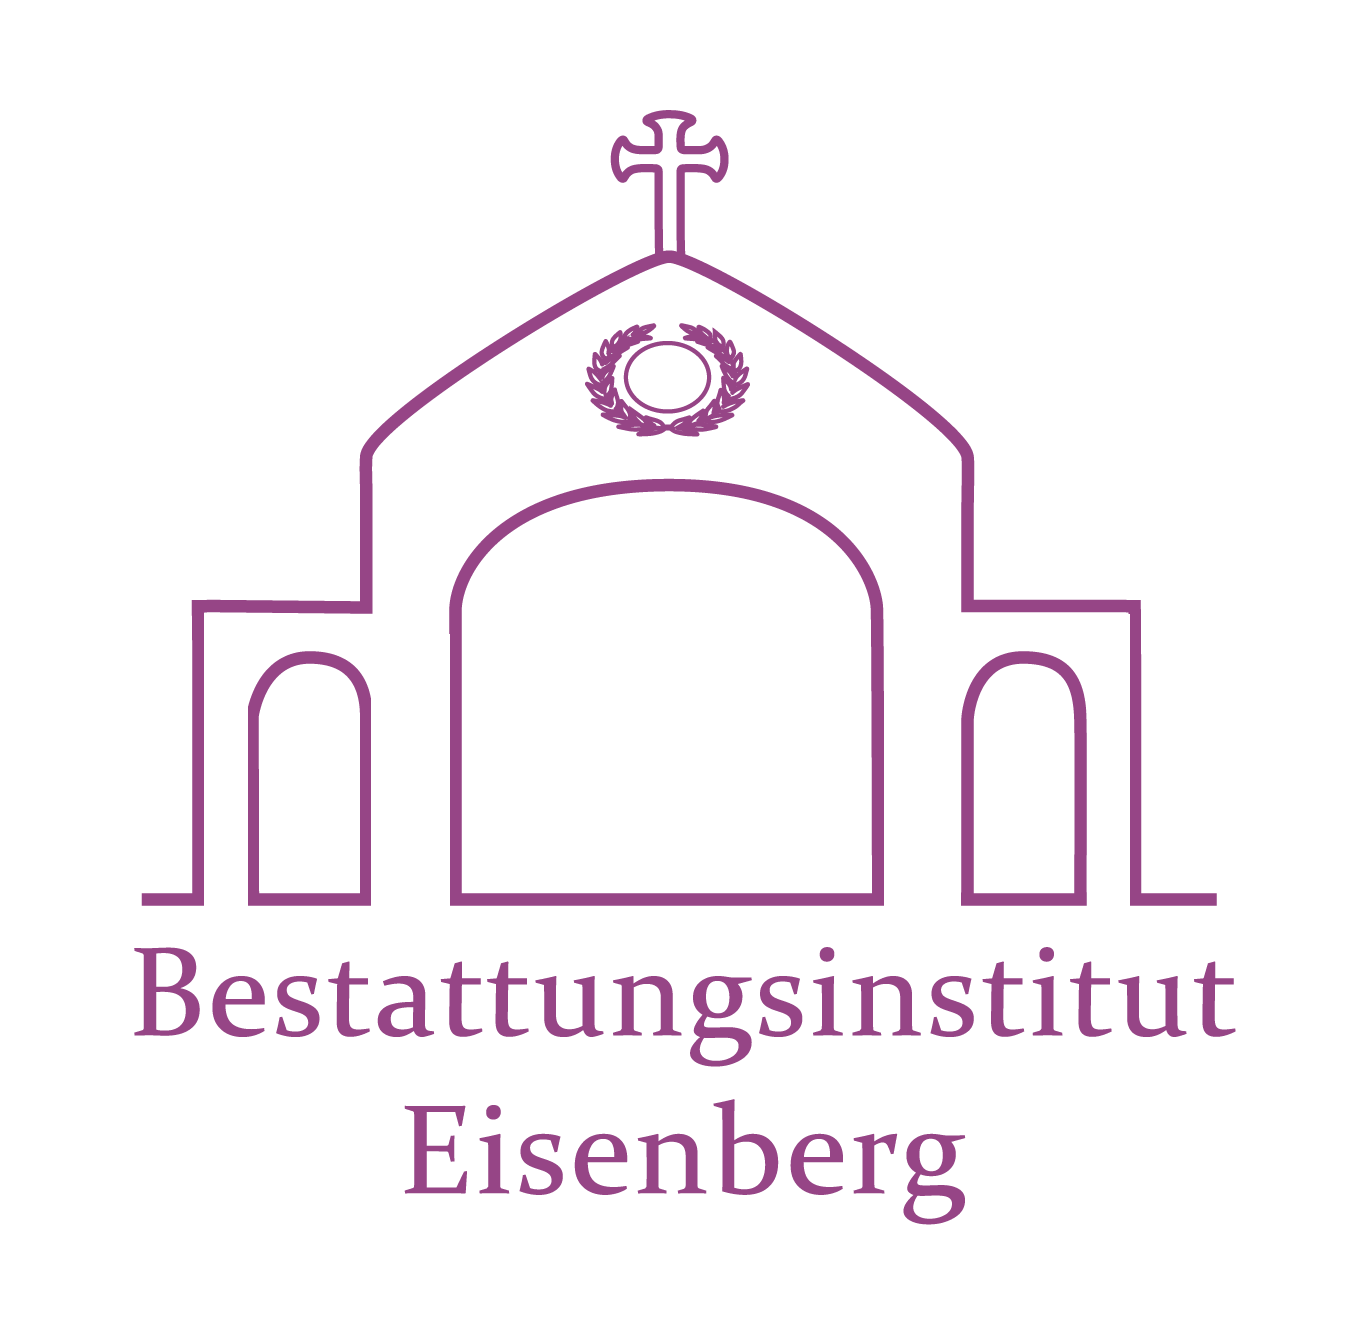 Bestattungsinstitut Eisenberg